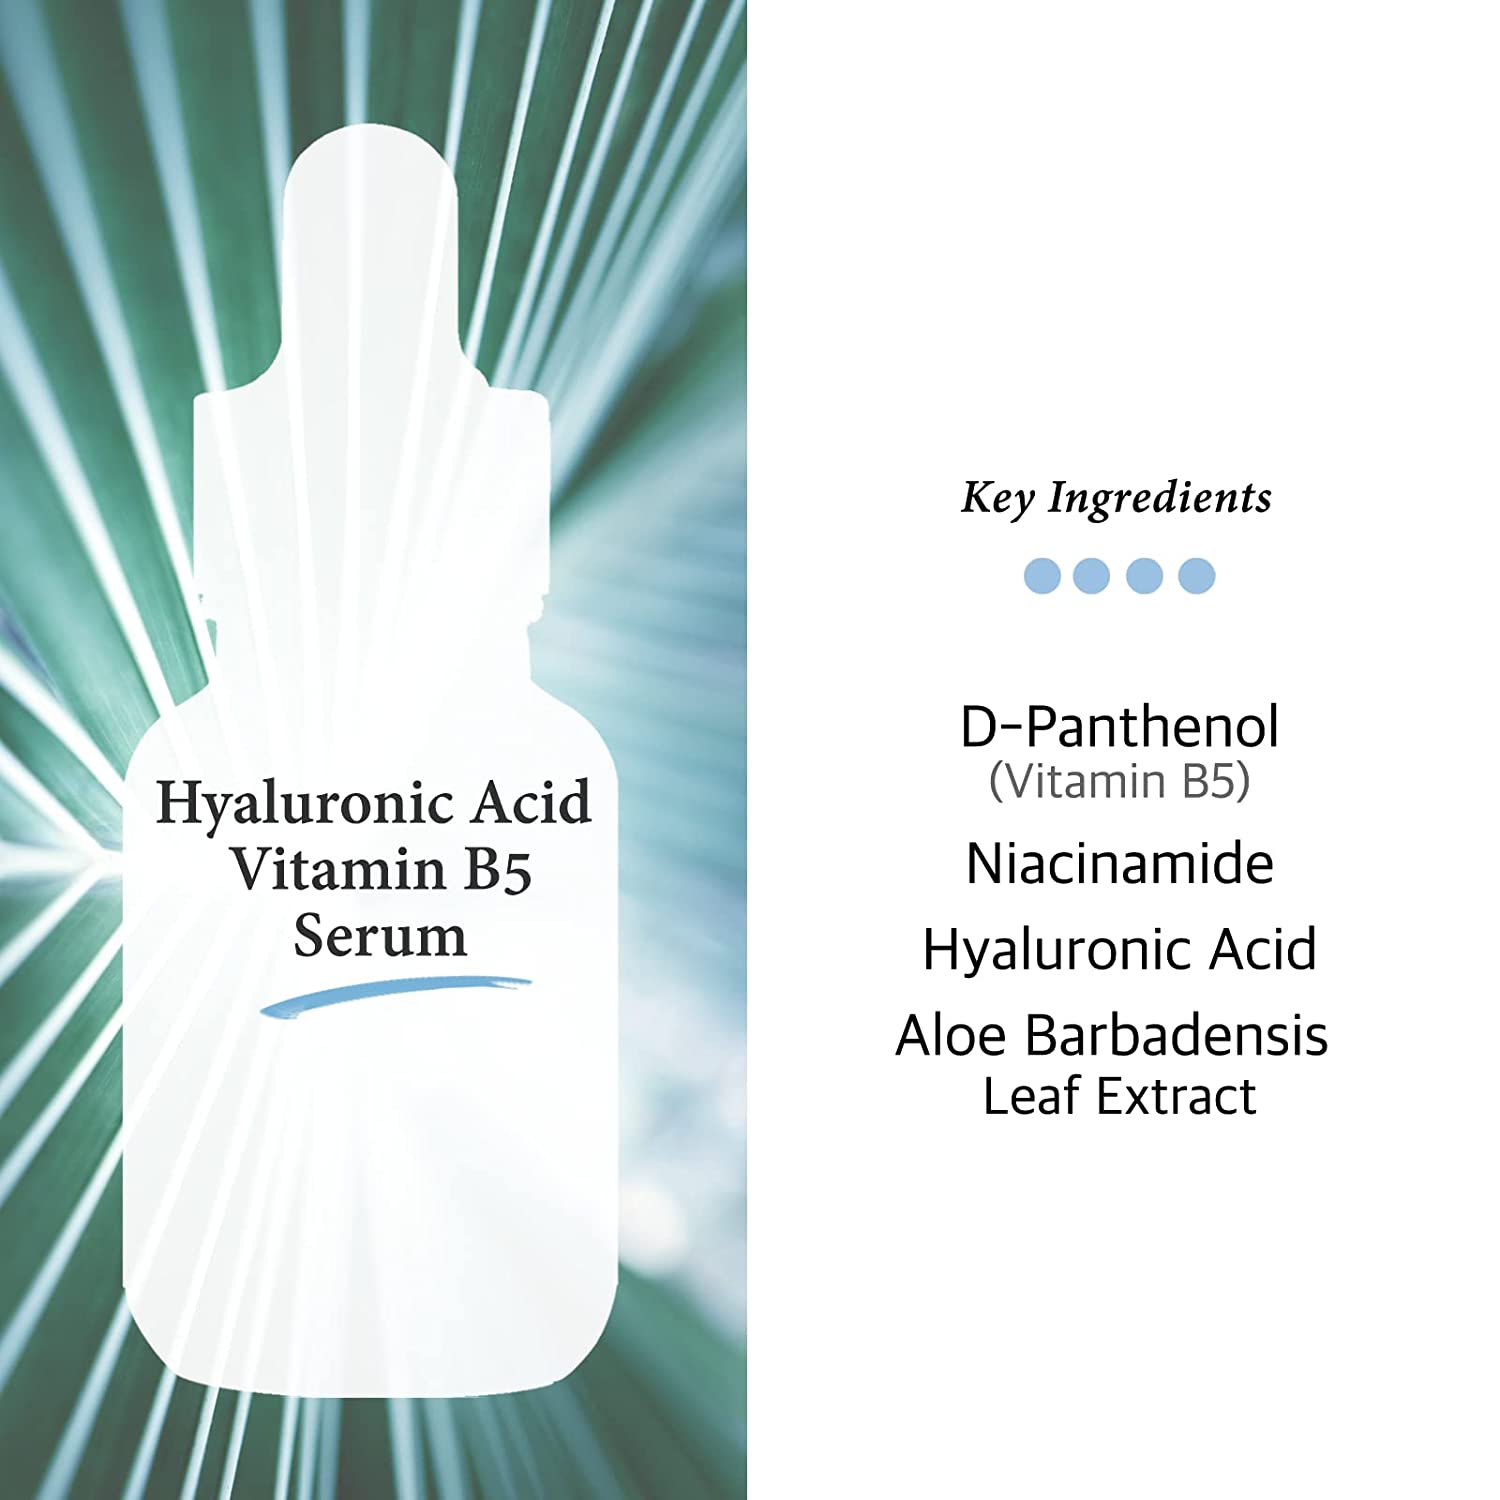 Cos de BAHA Hyaluronic Acid, Vitamin B5 (HP) Facial Serum 30ml